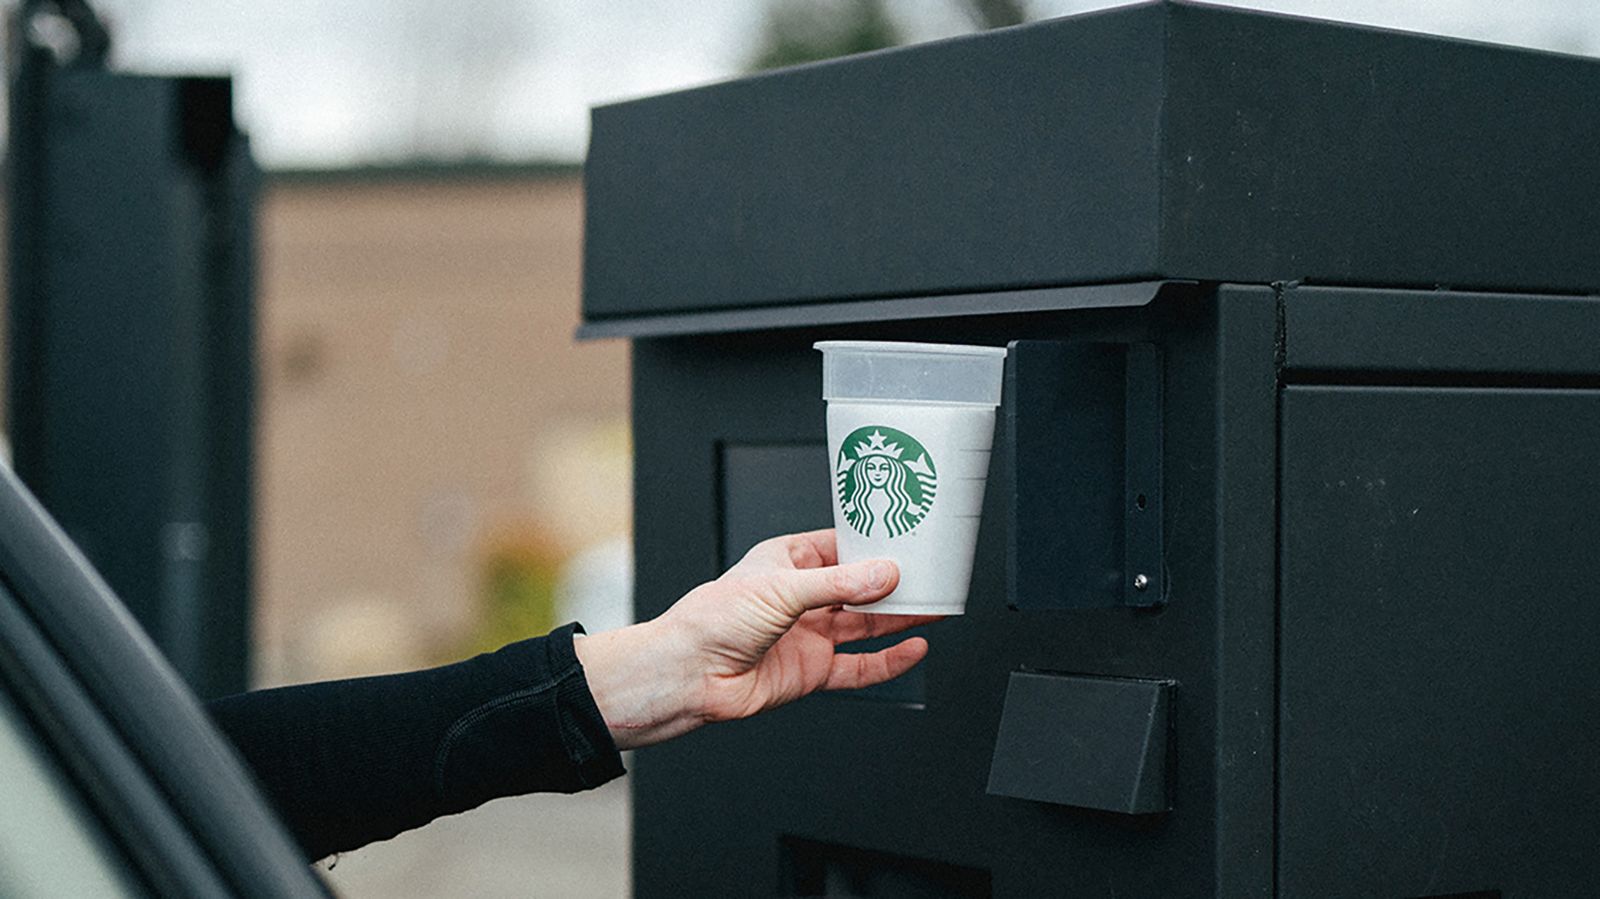 Starbucks Latest California Borrow A Cup Test Furthers Company's Shift  Toward Reusables